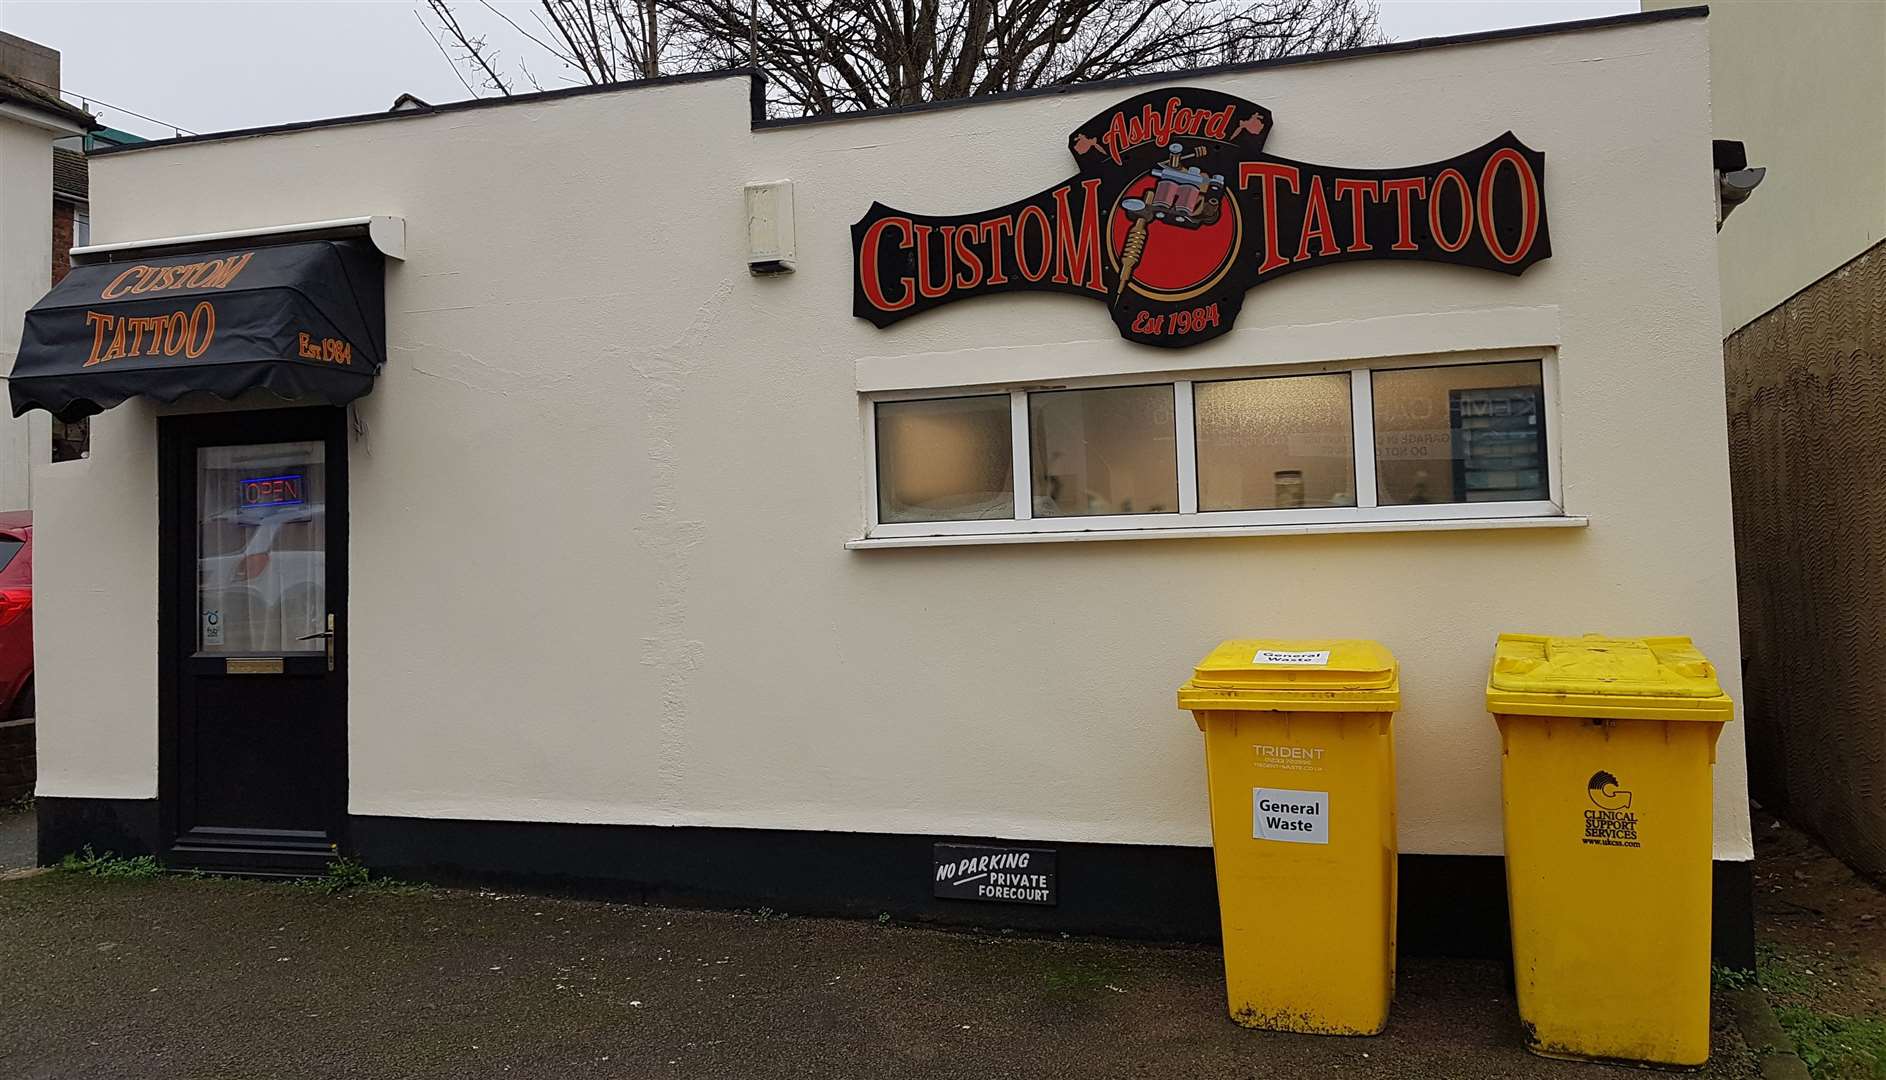 Ashford Custom Tattoo in Queen Street